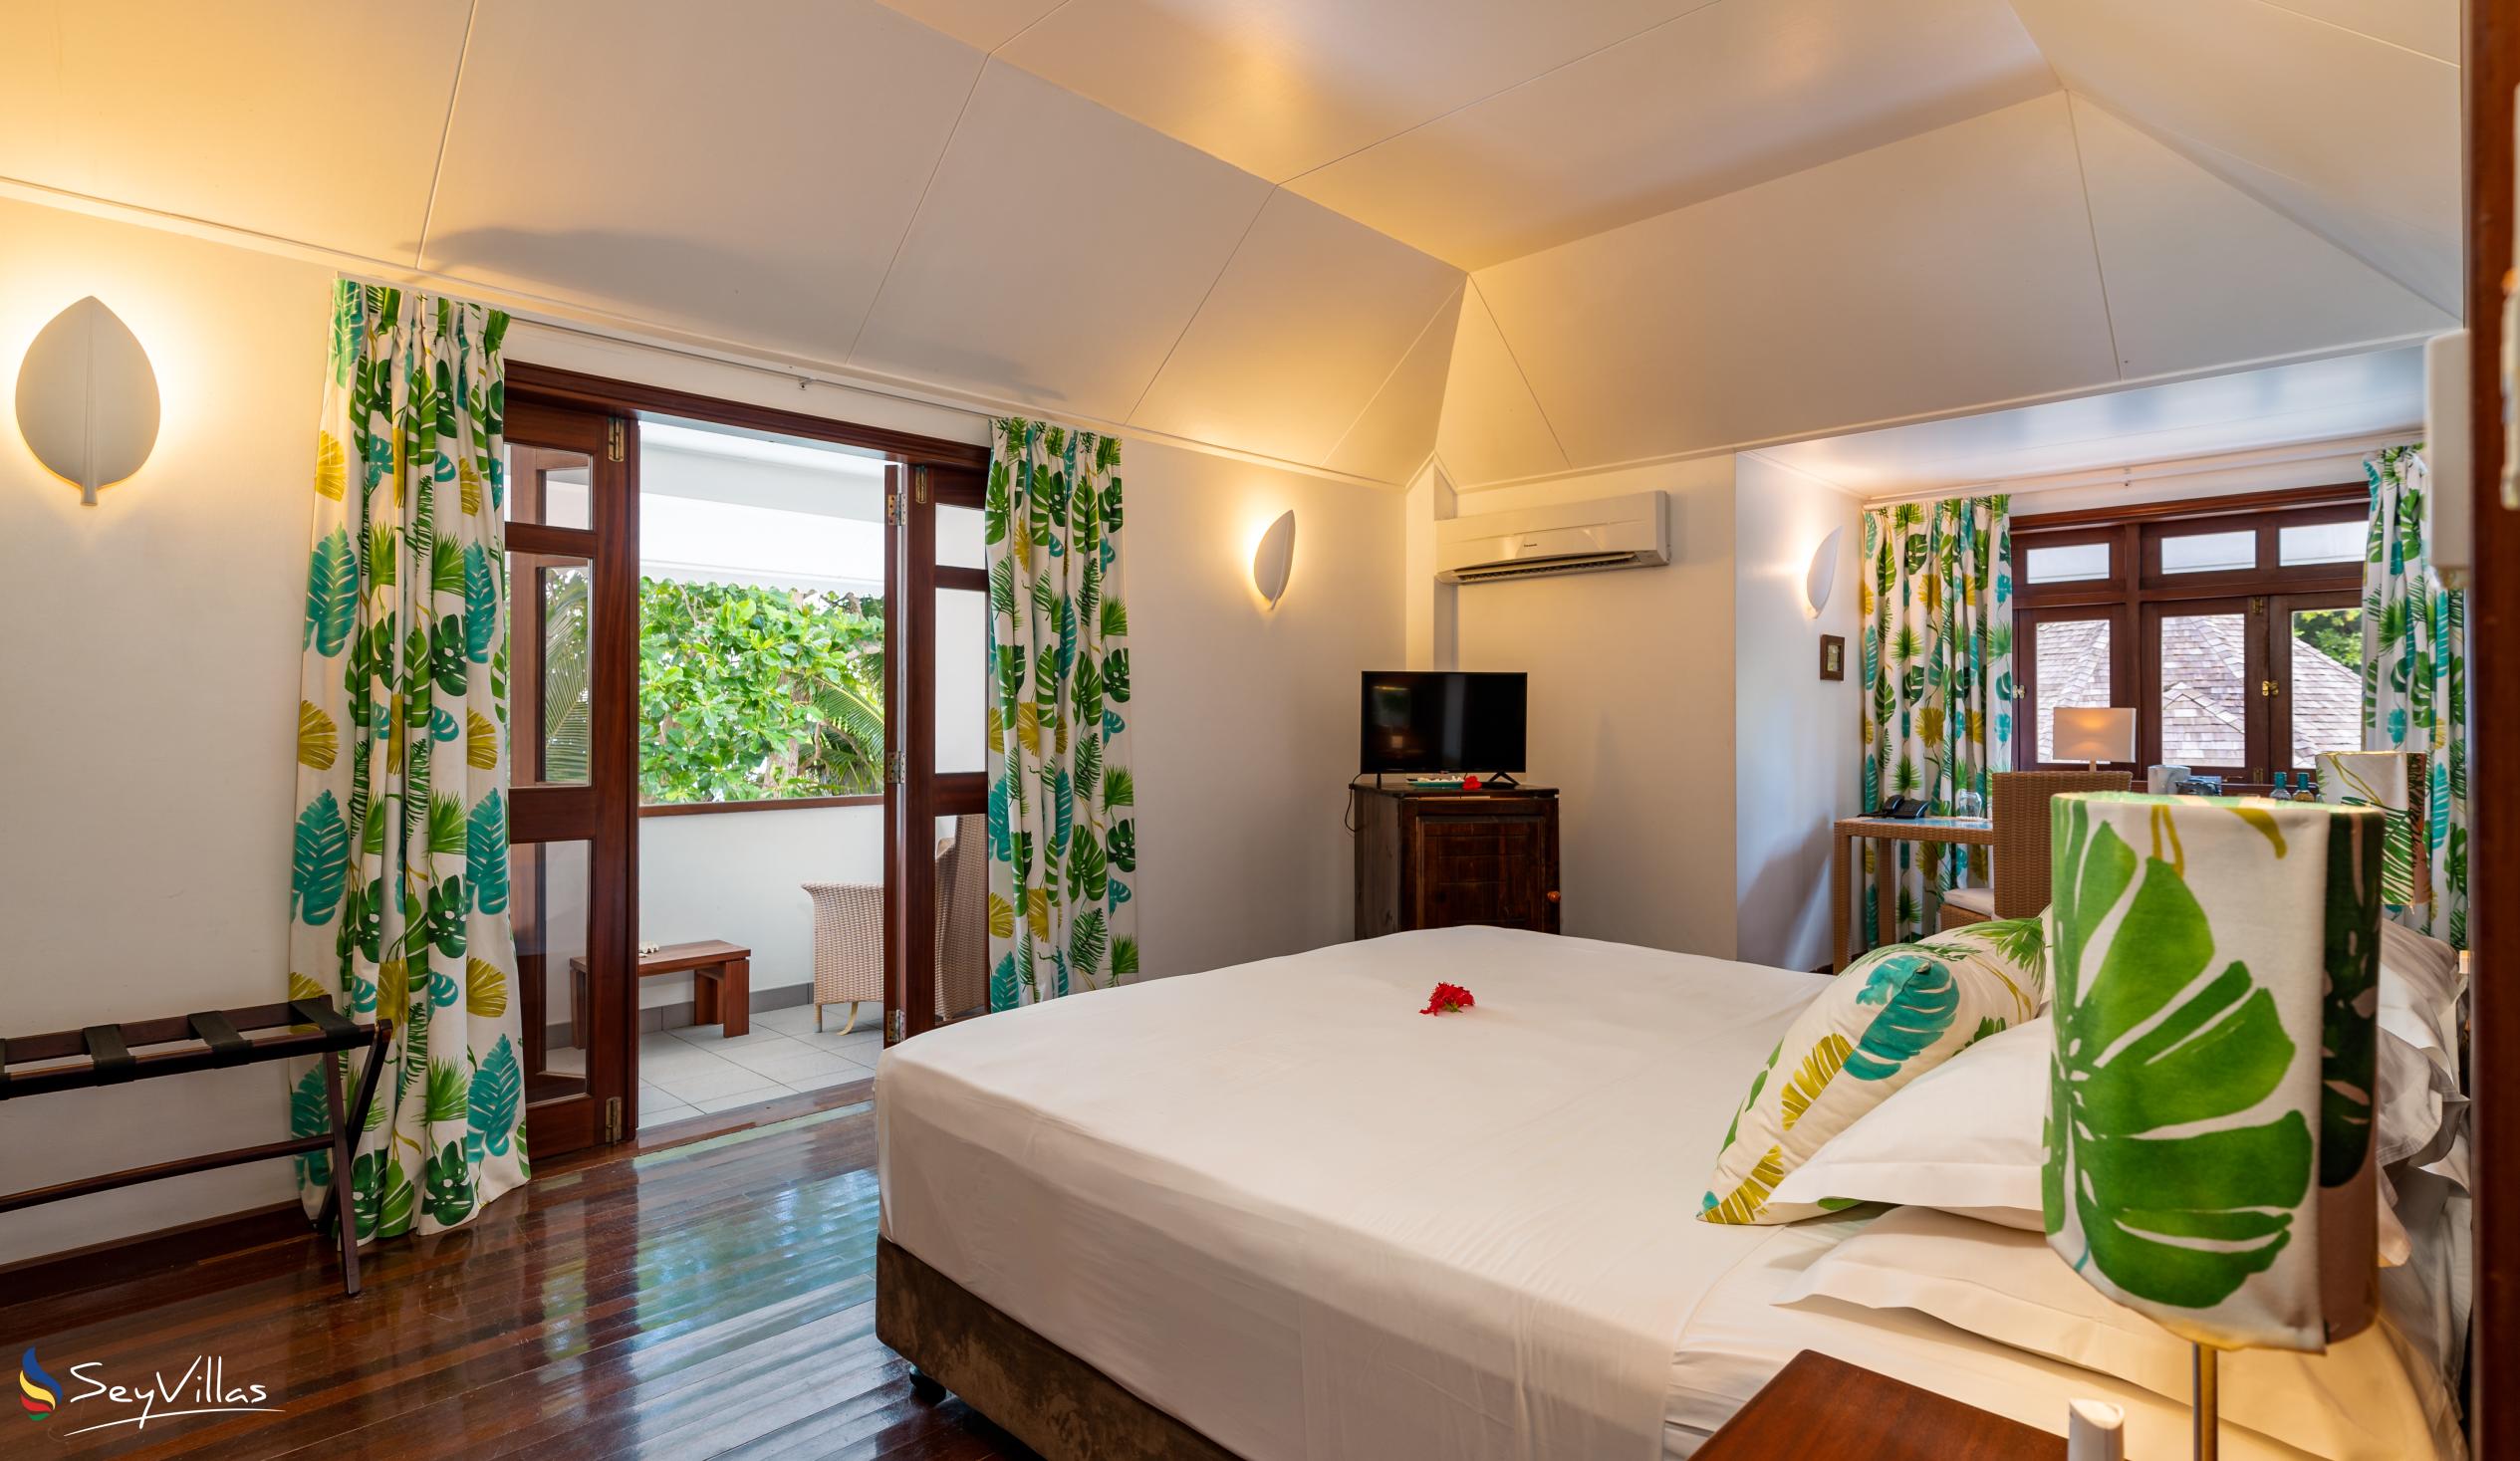 Photo 94: La Belle Tortue - Lodge Room with Balcony - Silhouette Island (Seychelles)